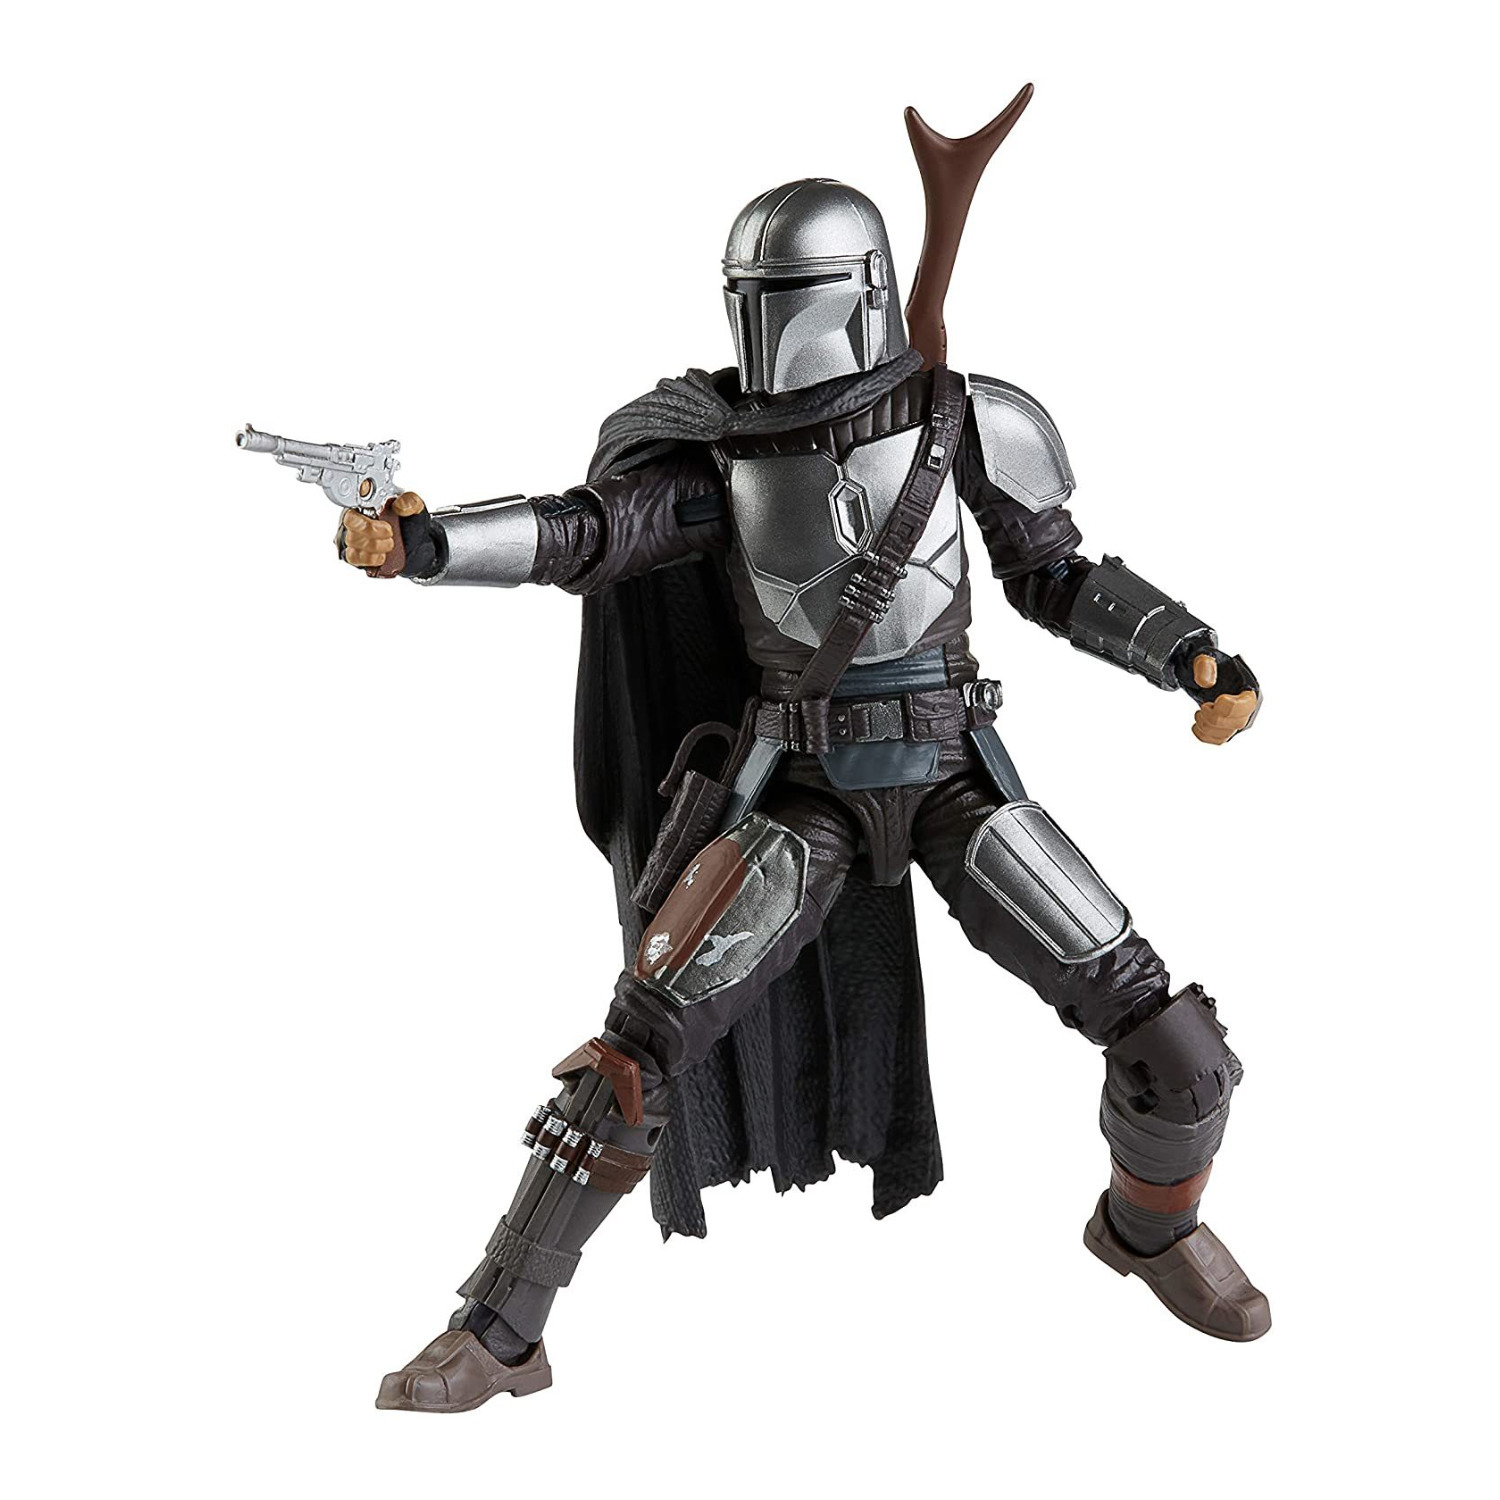 Star Wars Hasbro Star Wars Black Series The Mandalorian (Beskar) 6-inch Collectible Action Figure